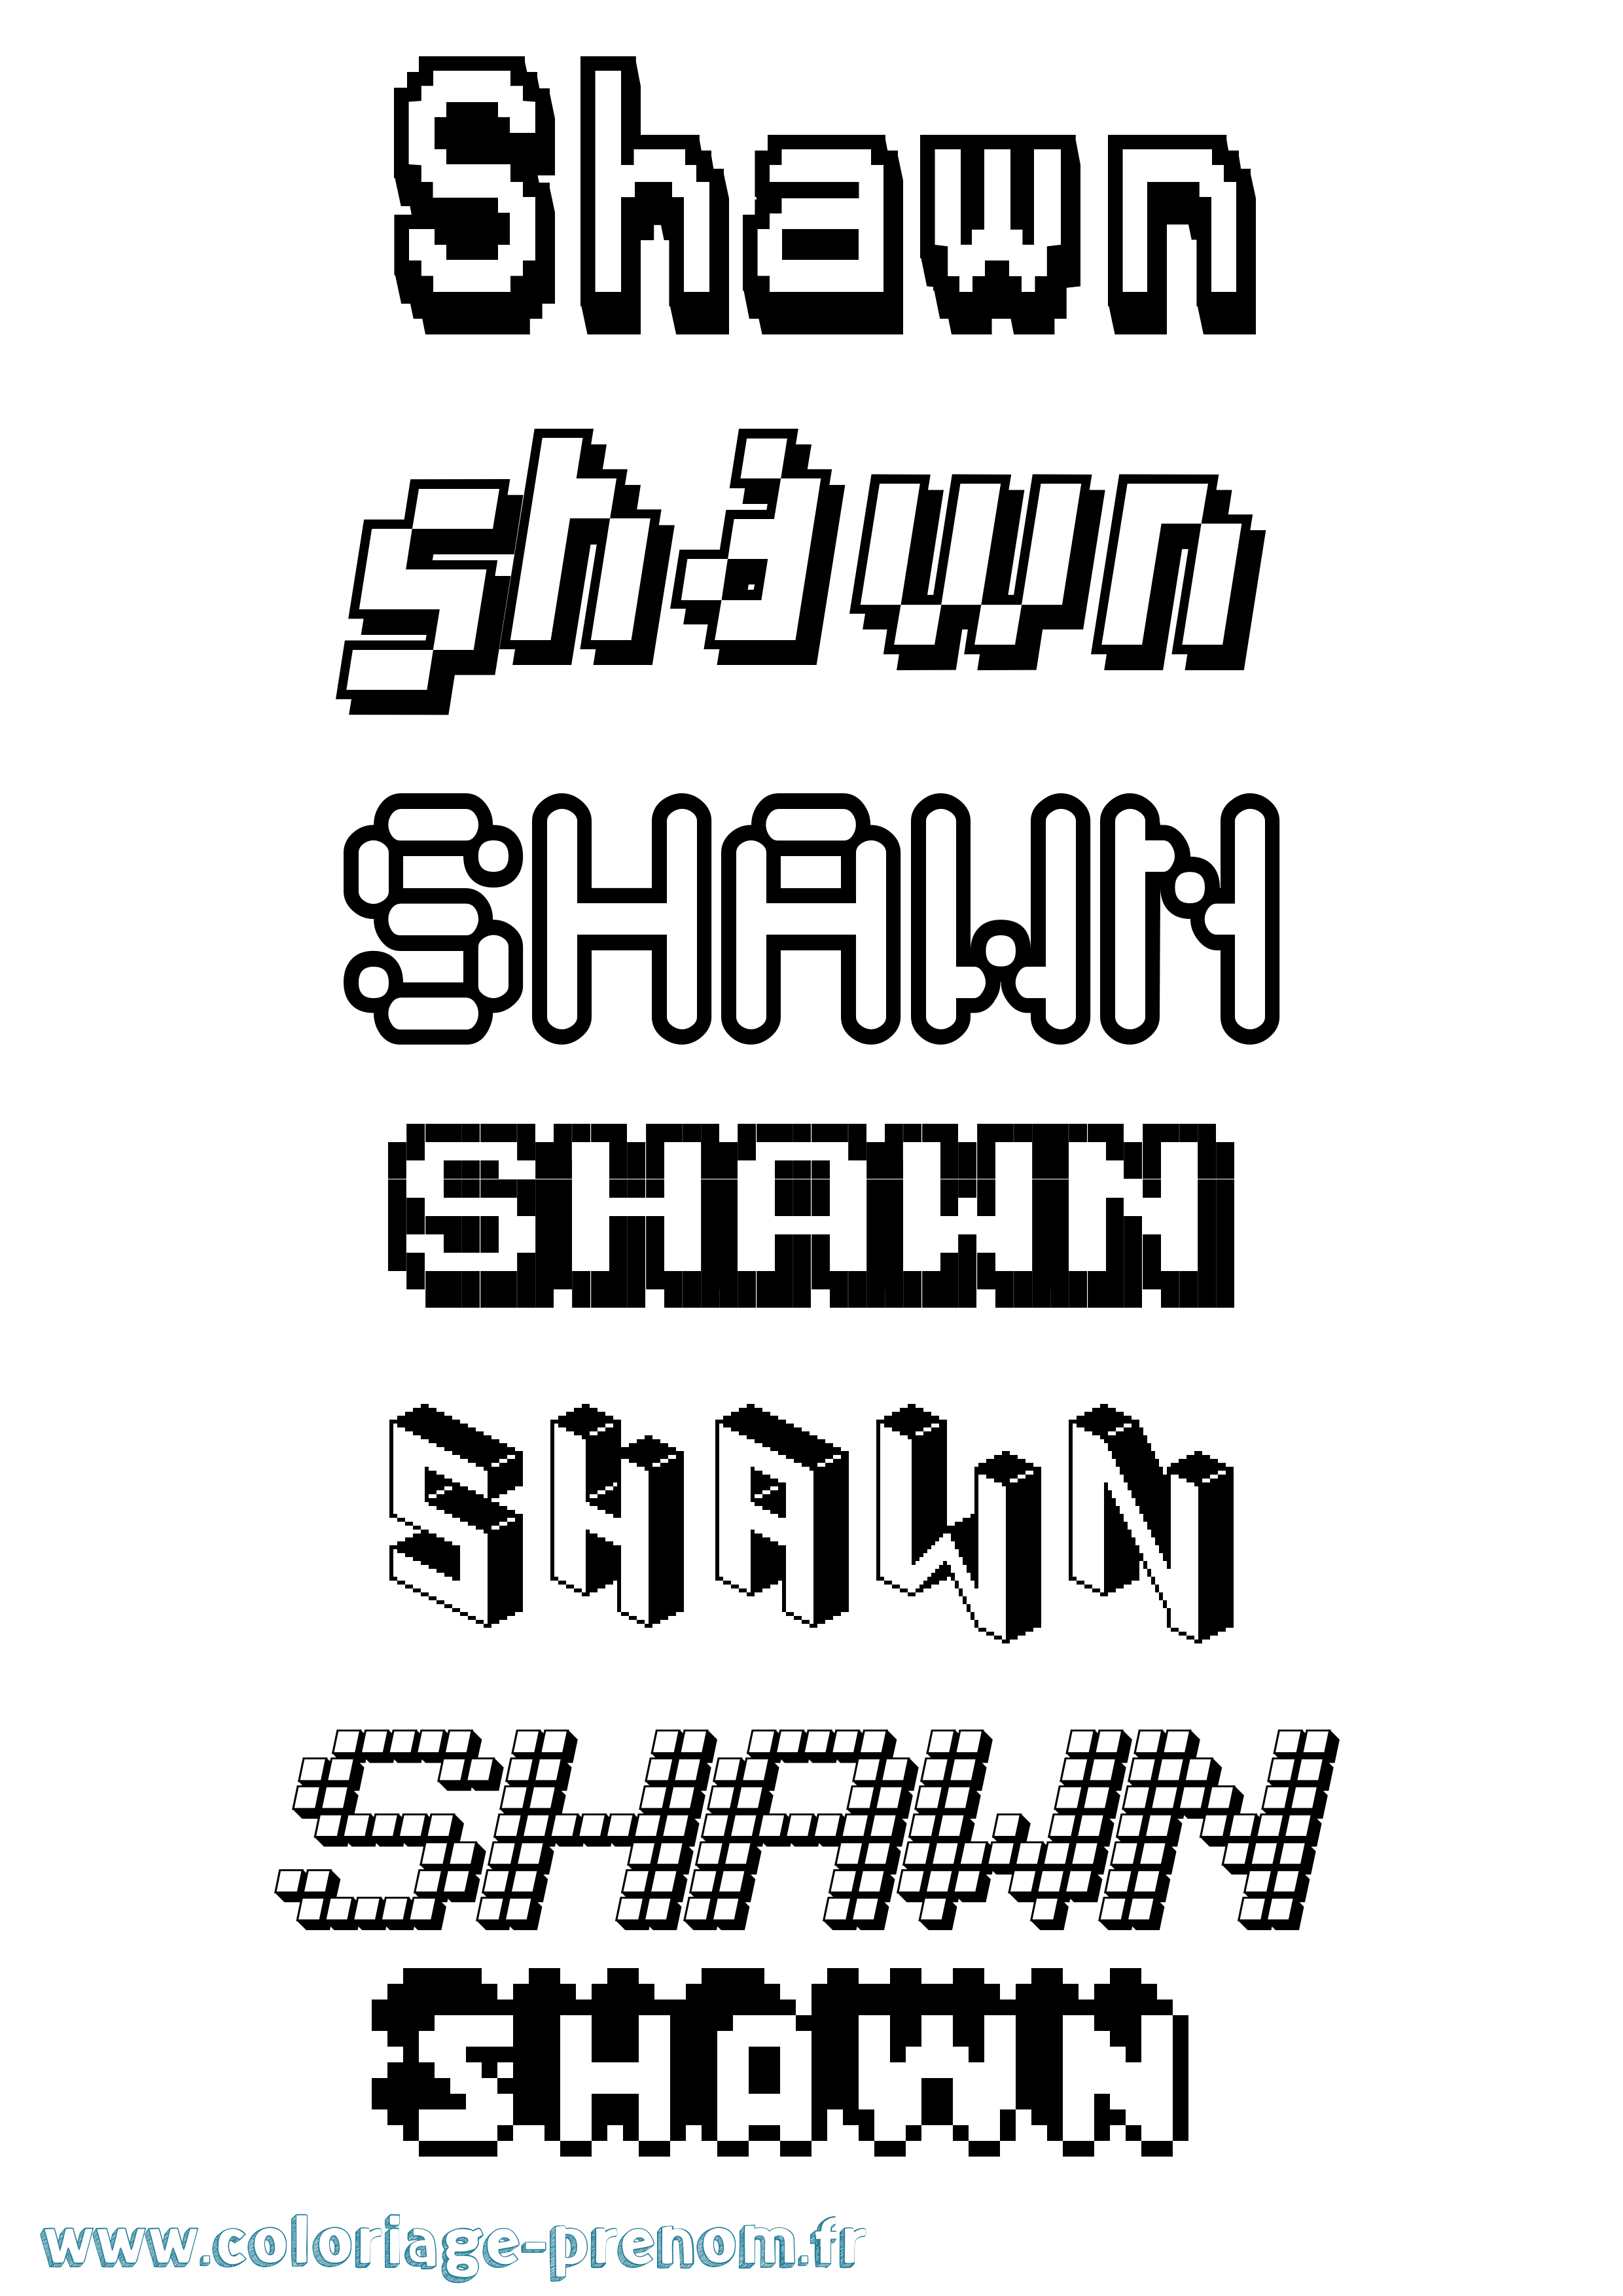 Coloriage prénom Shawn